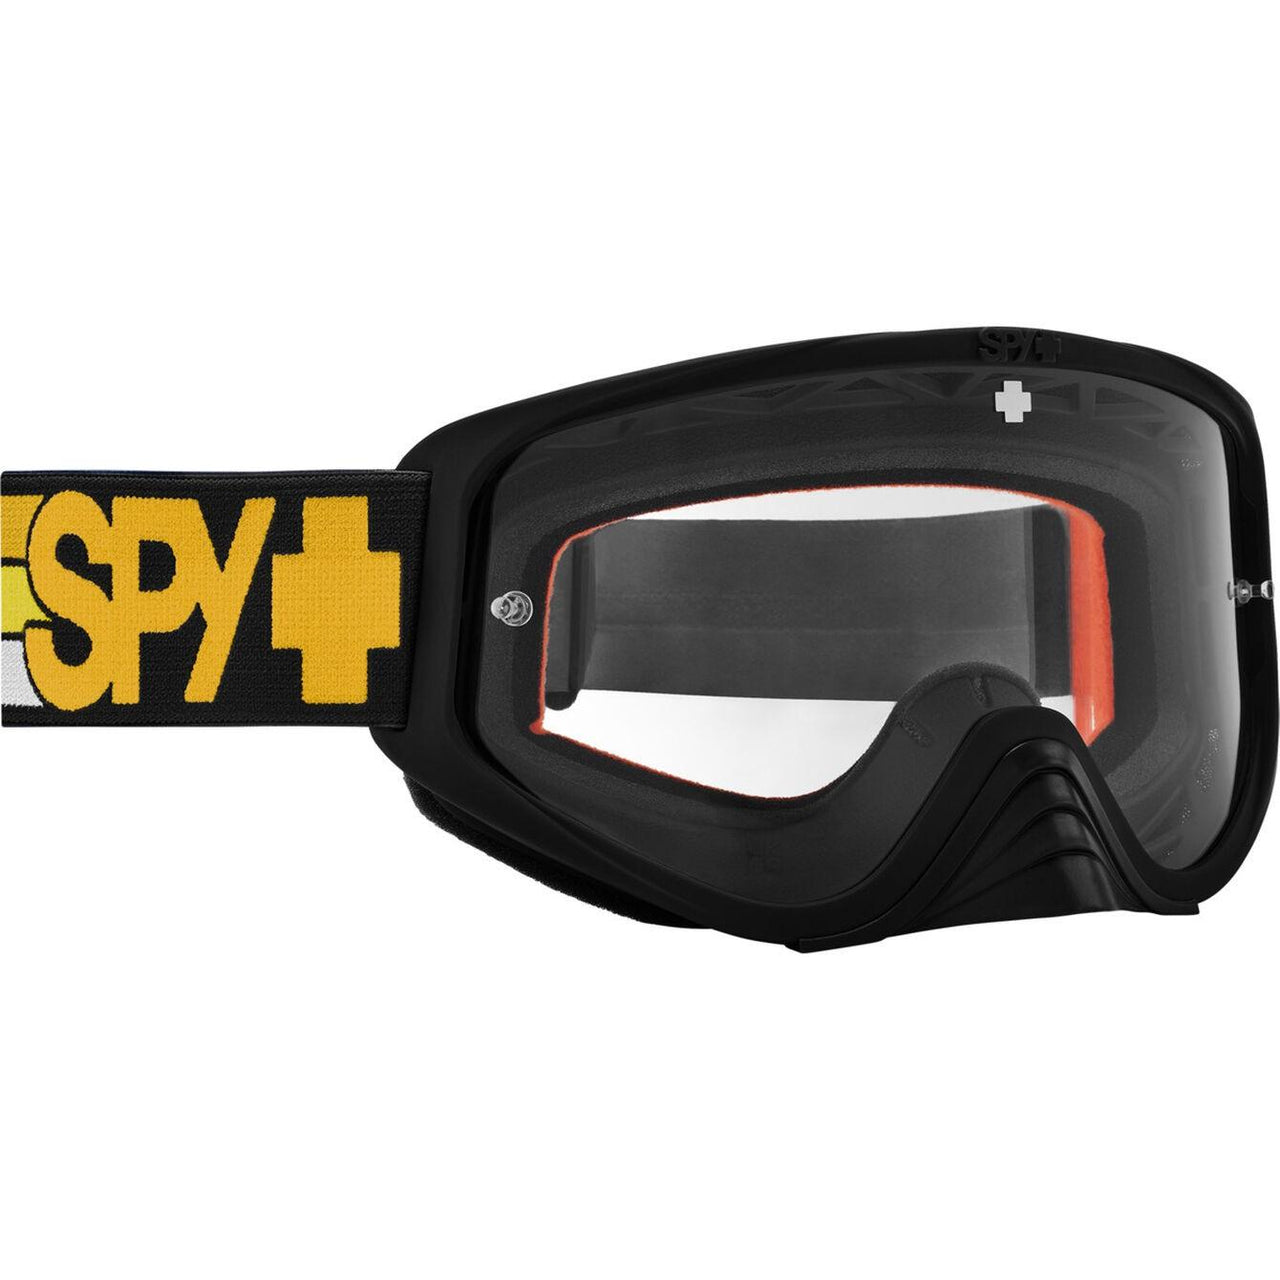 SpyOptic 313346 Goggles